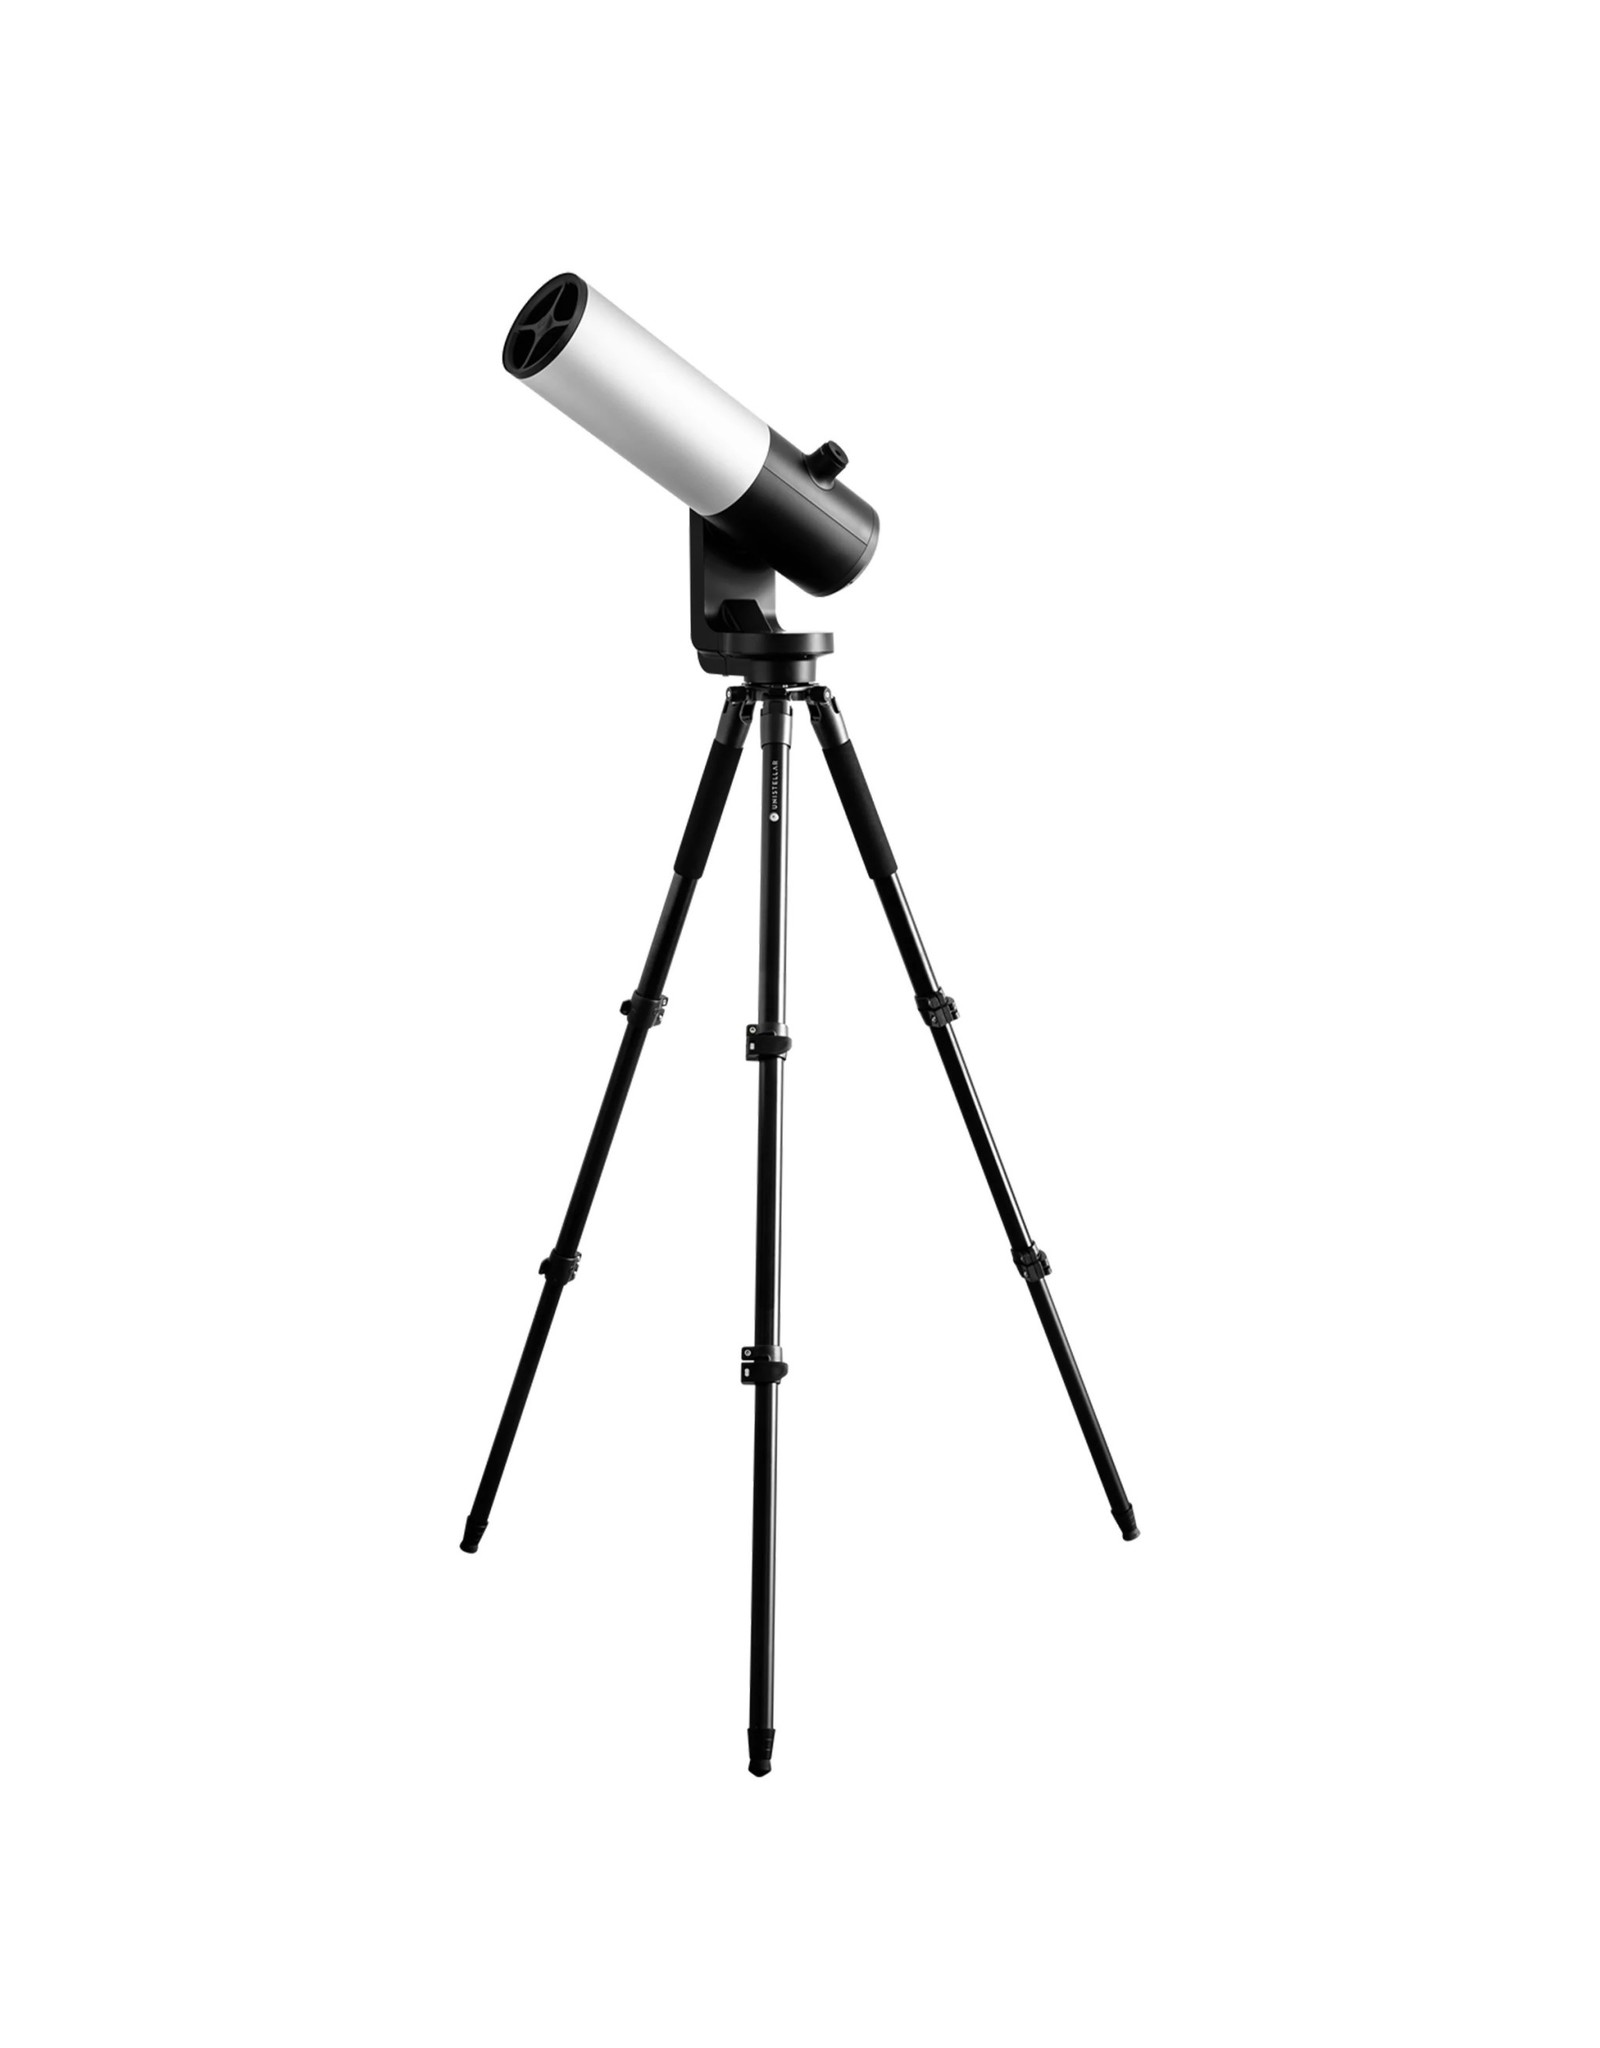 Unistellar Unistellar eVscope 2 Digital Telescope - Smart, Compact, and User-Friendly Telescope